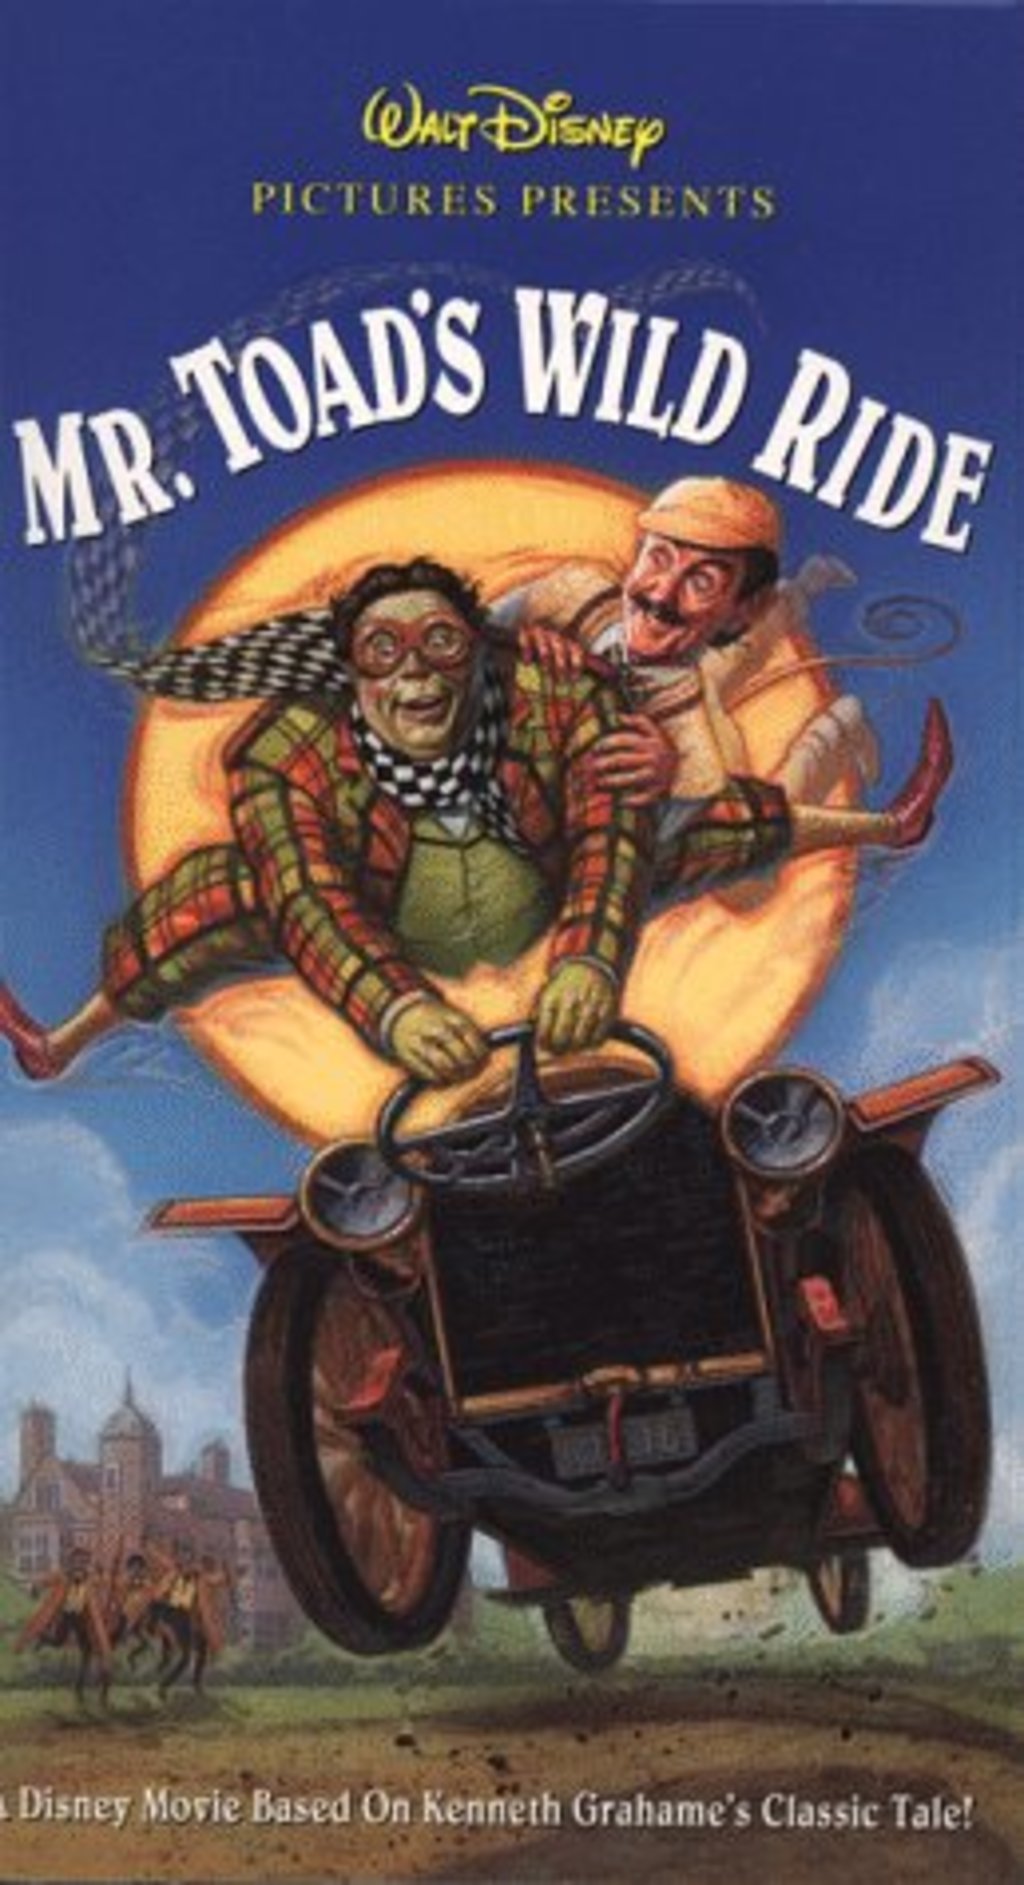 Watch Mr. Toad's Wild Ride on Netflix Today! | NetflixMovies.com